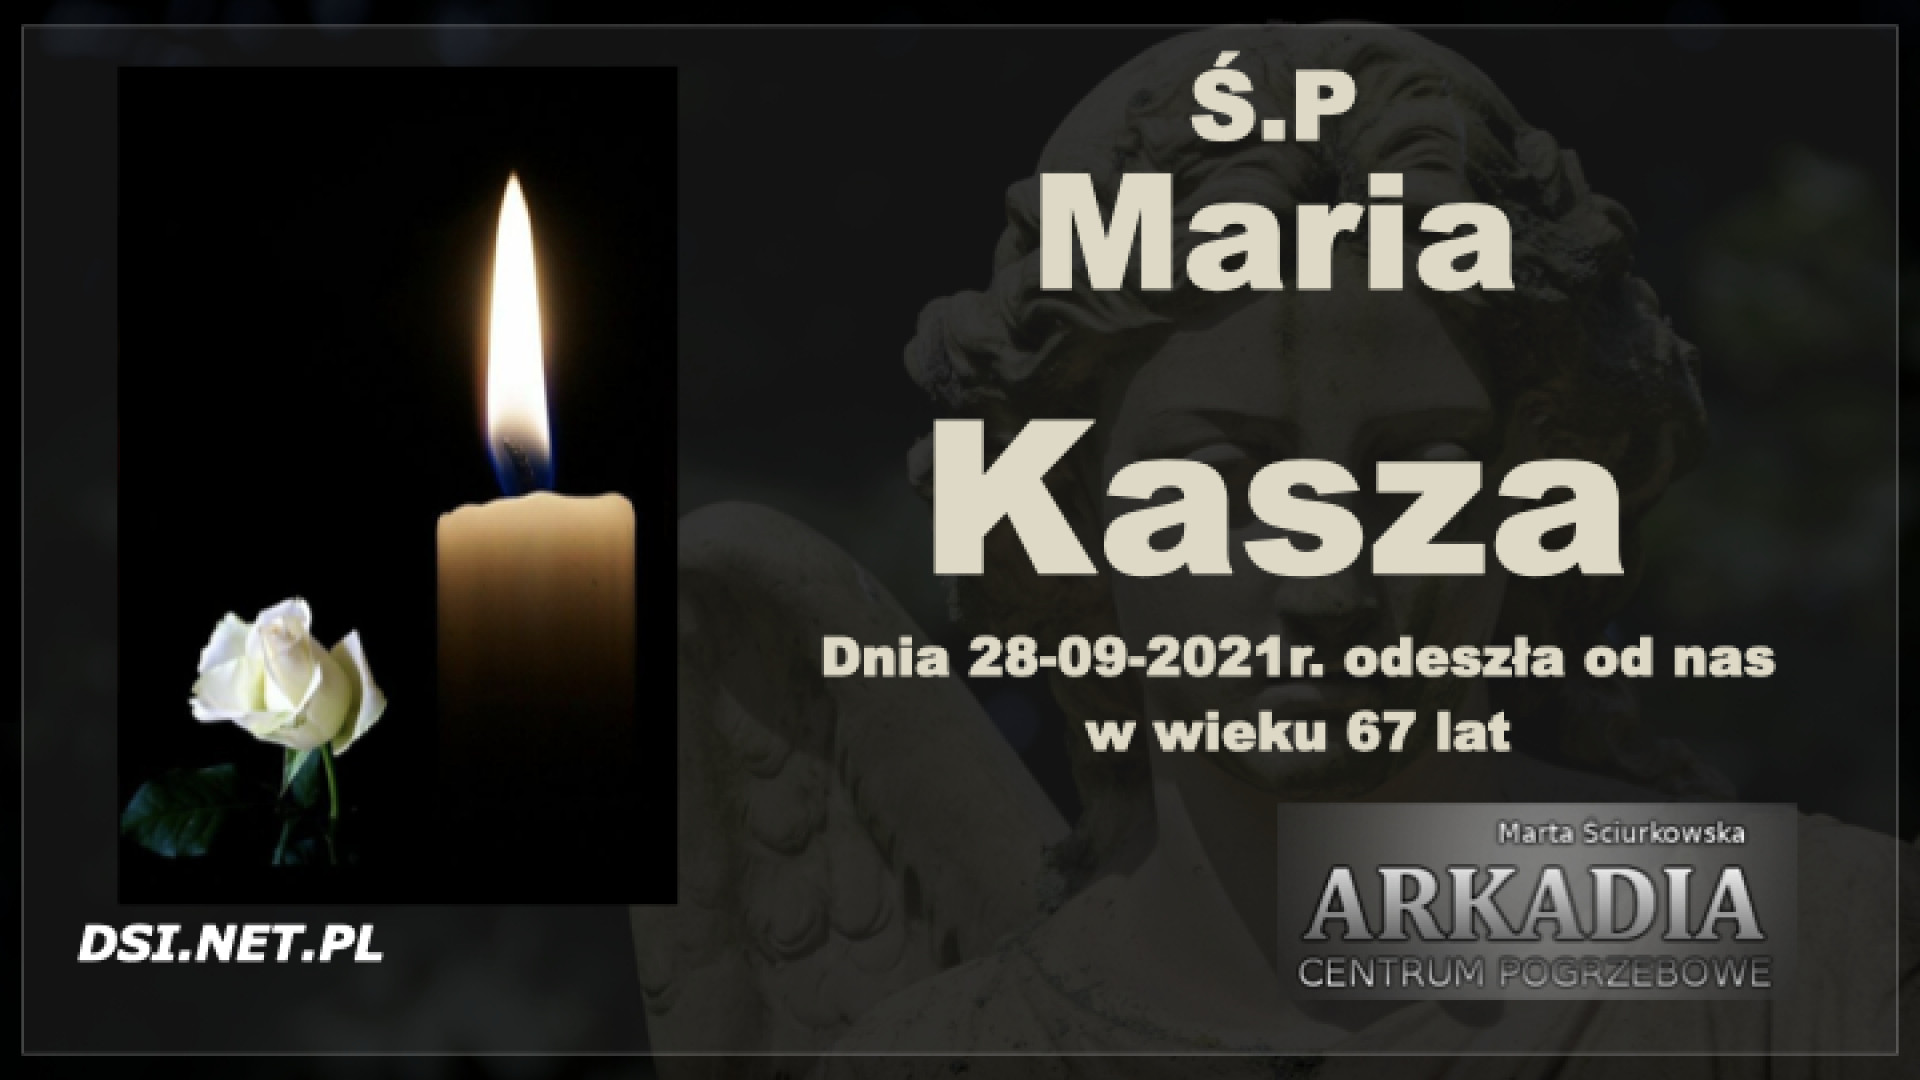 Ś.P. Maria Kasza